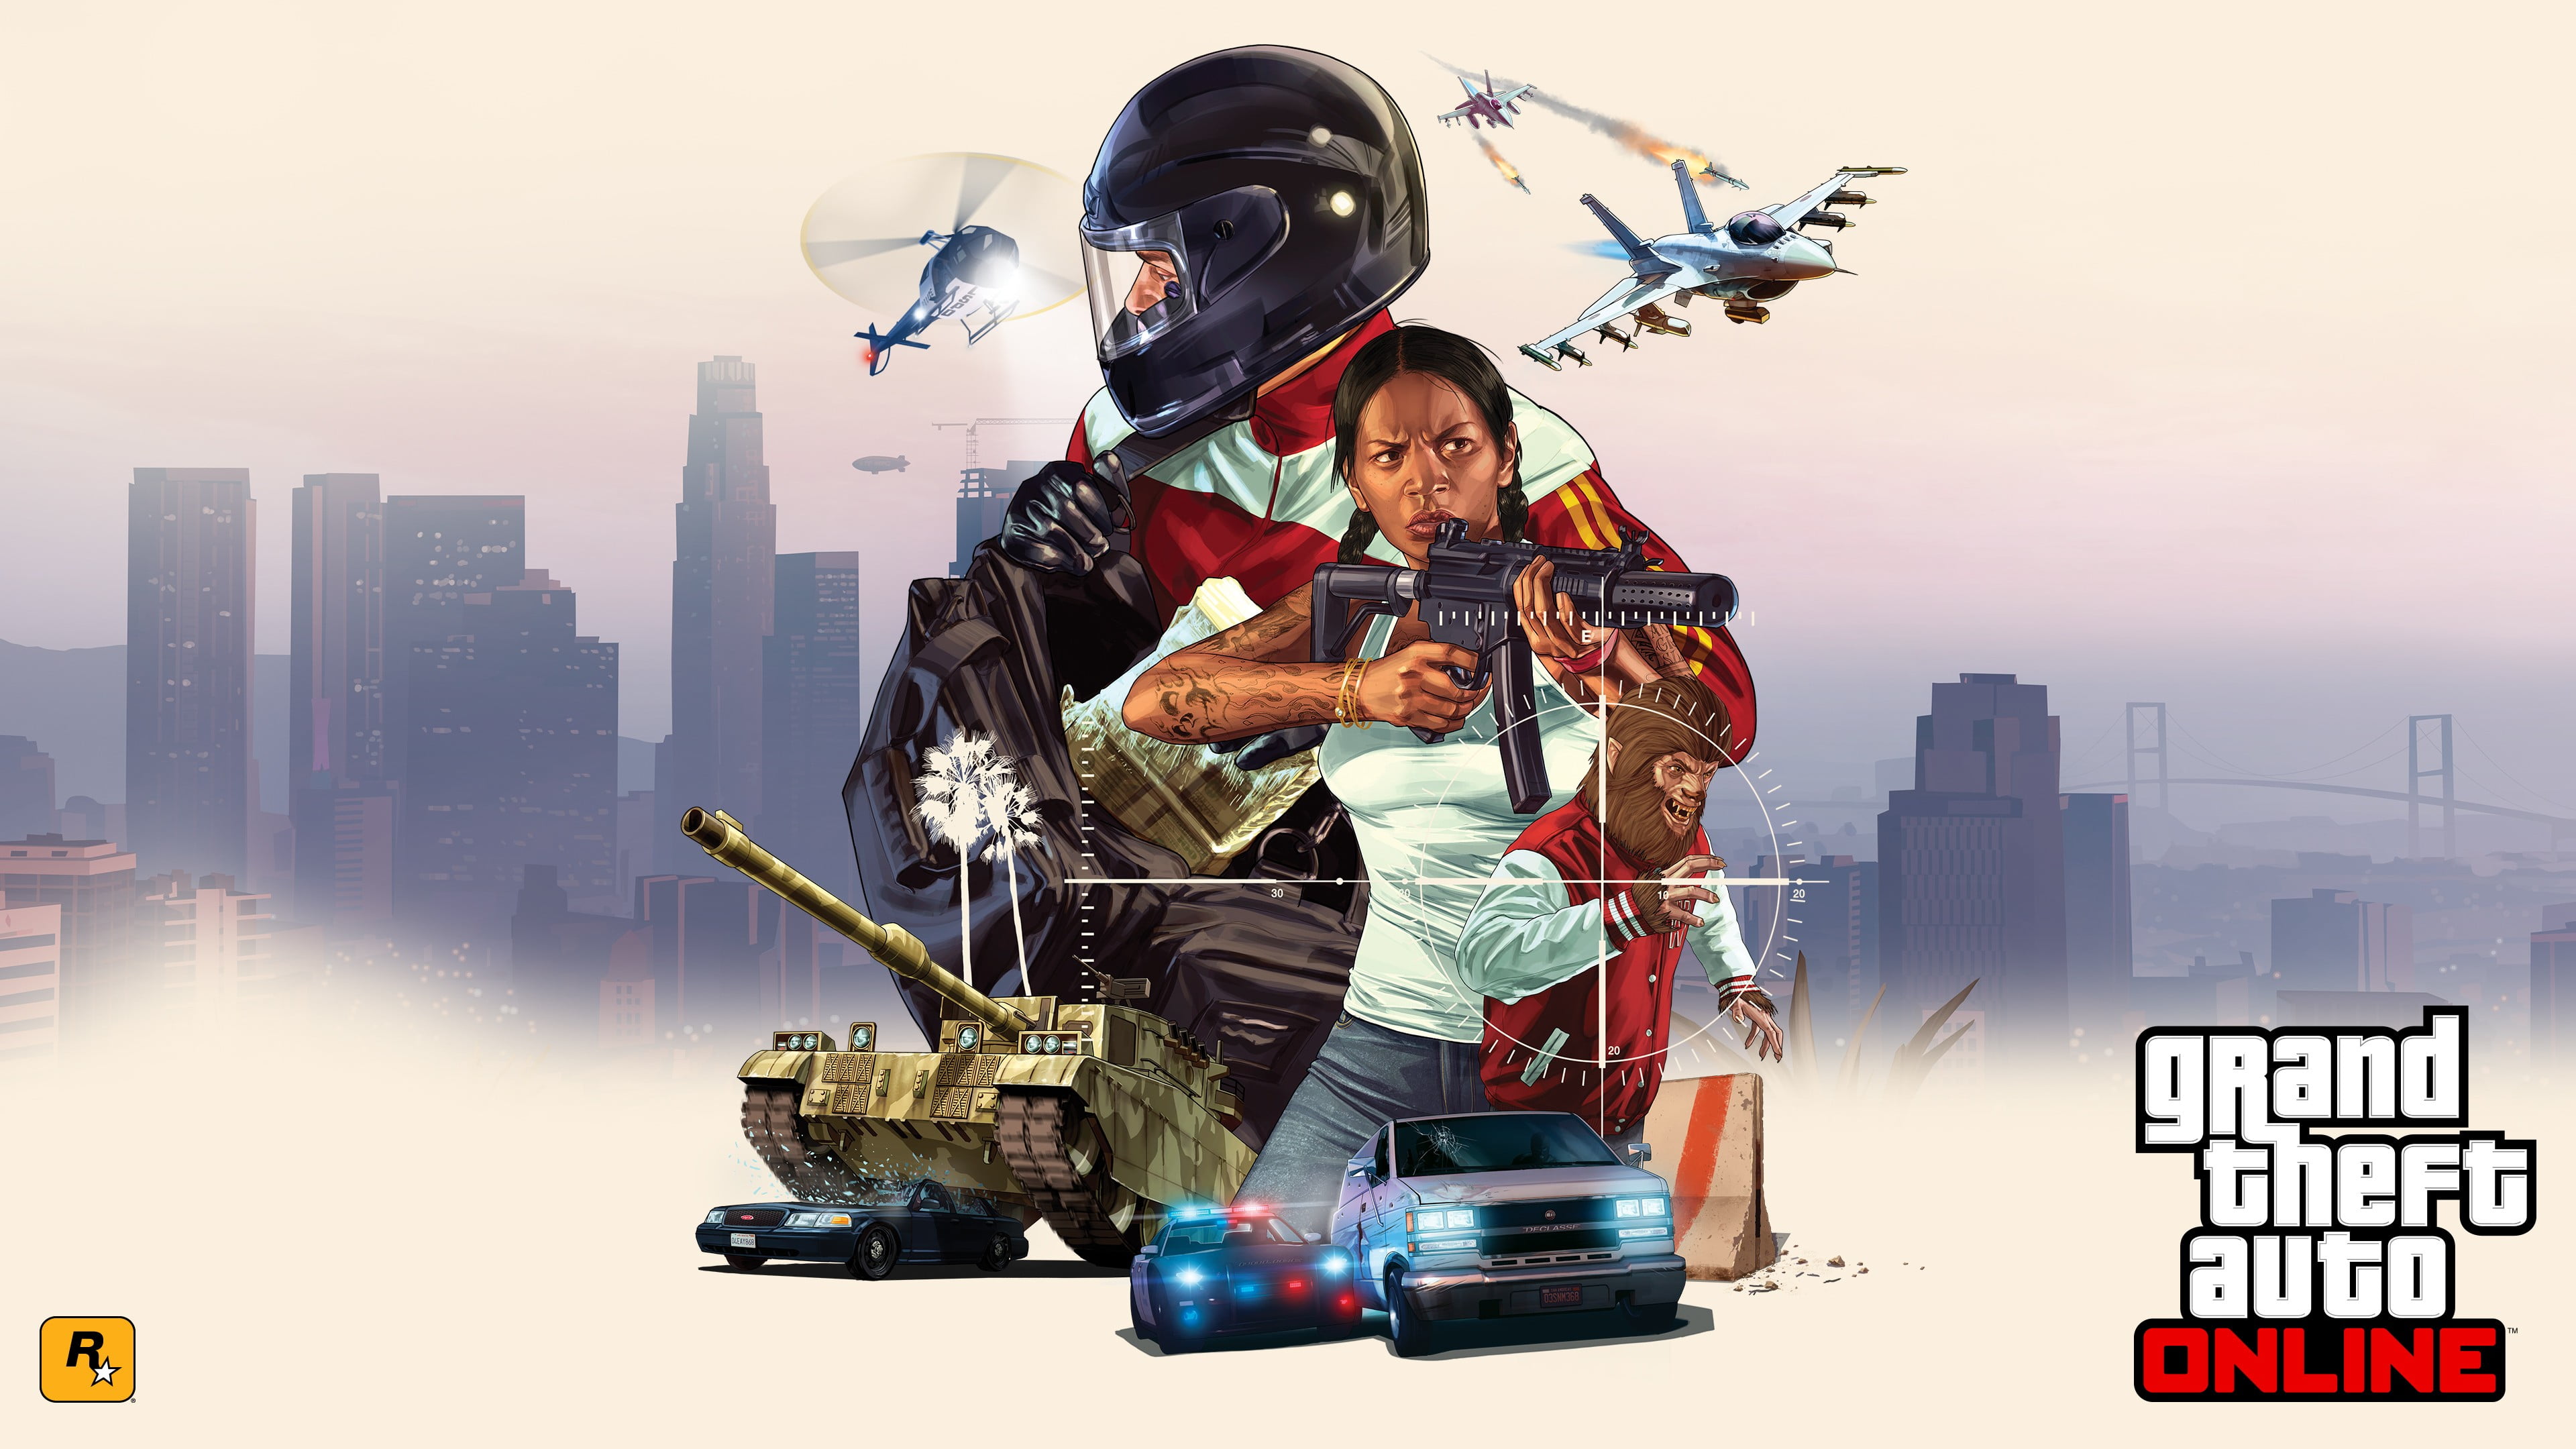 GTA online digital wallpaper, Grand Theft Auto V, Grand Theft Auto V Online, Rockstar Games, tank